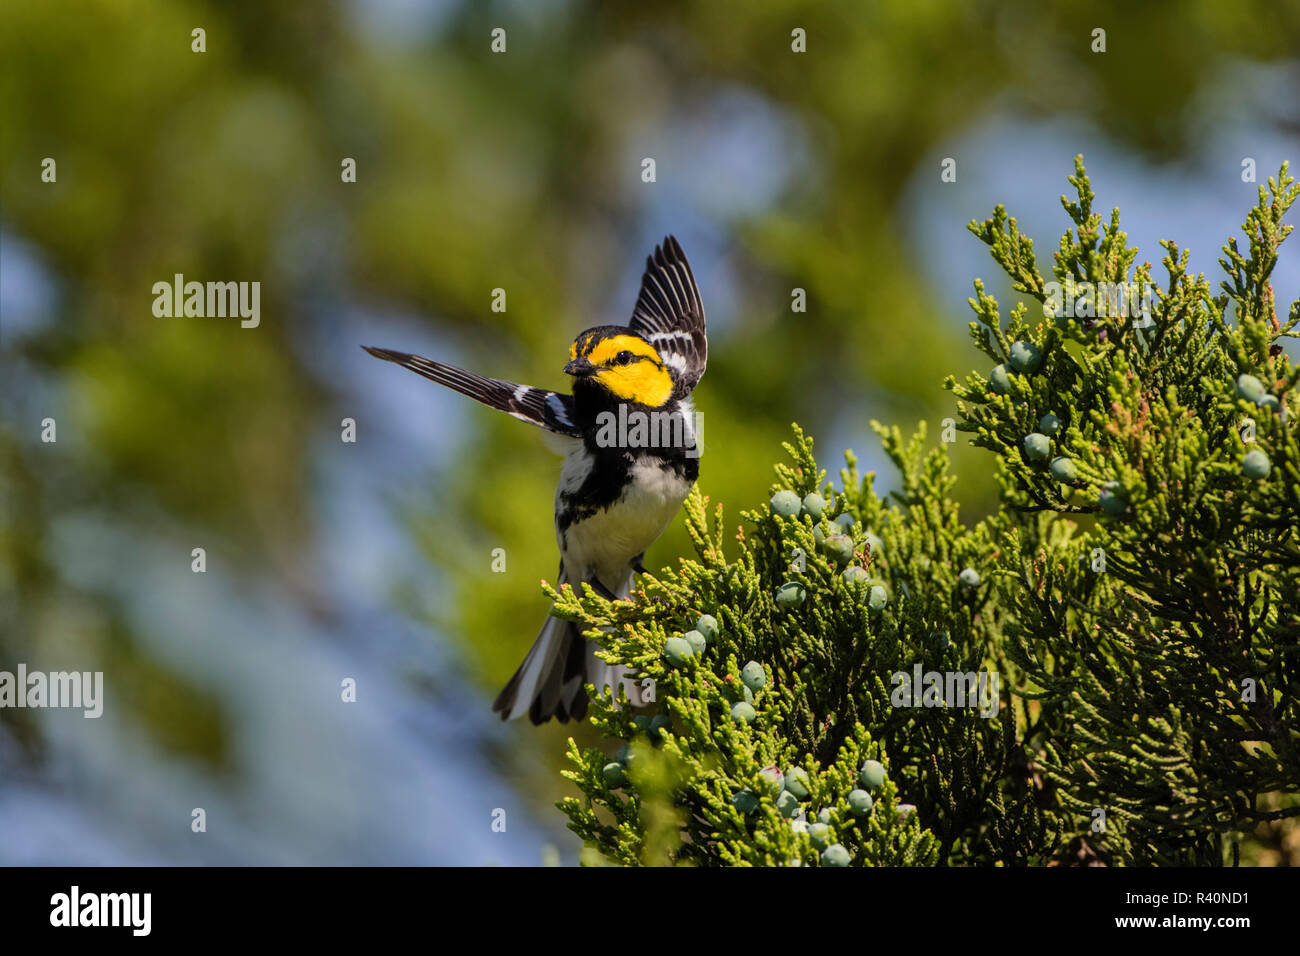 Golden-cheeked Warbler (Dendrolica chrysoparia) adult in juniper habitat Stock Photo